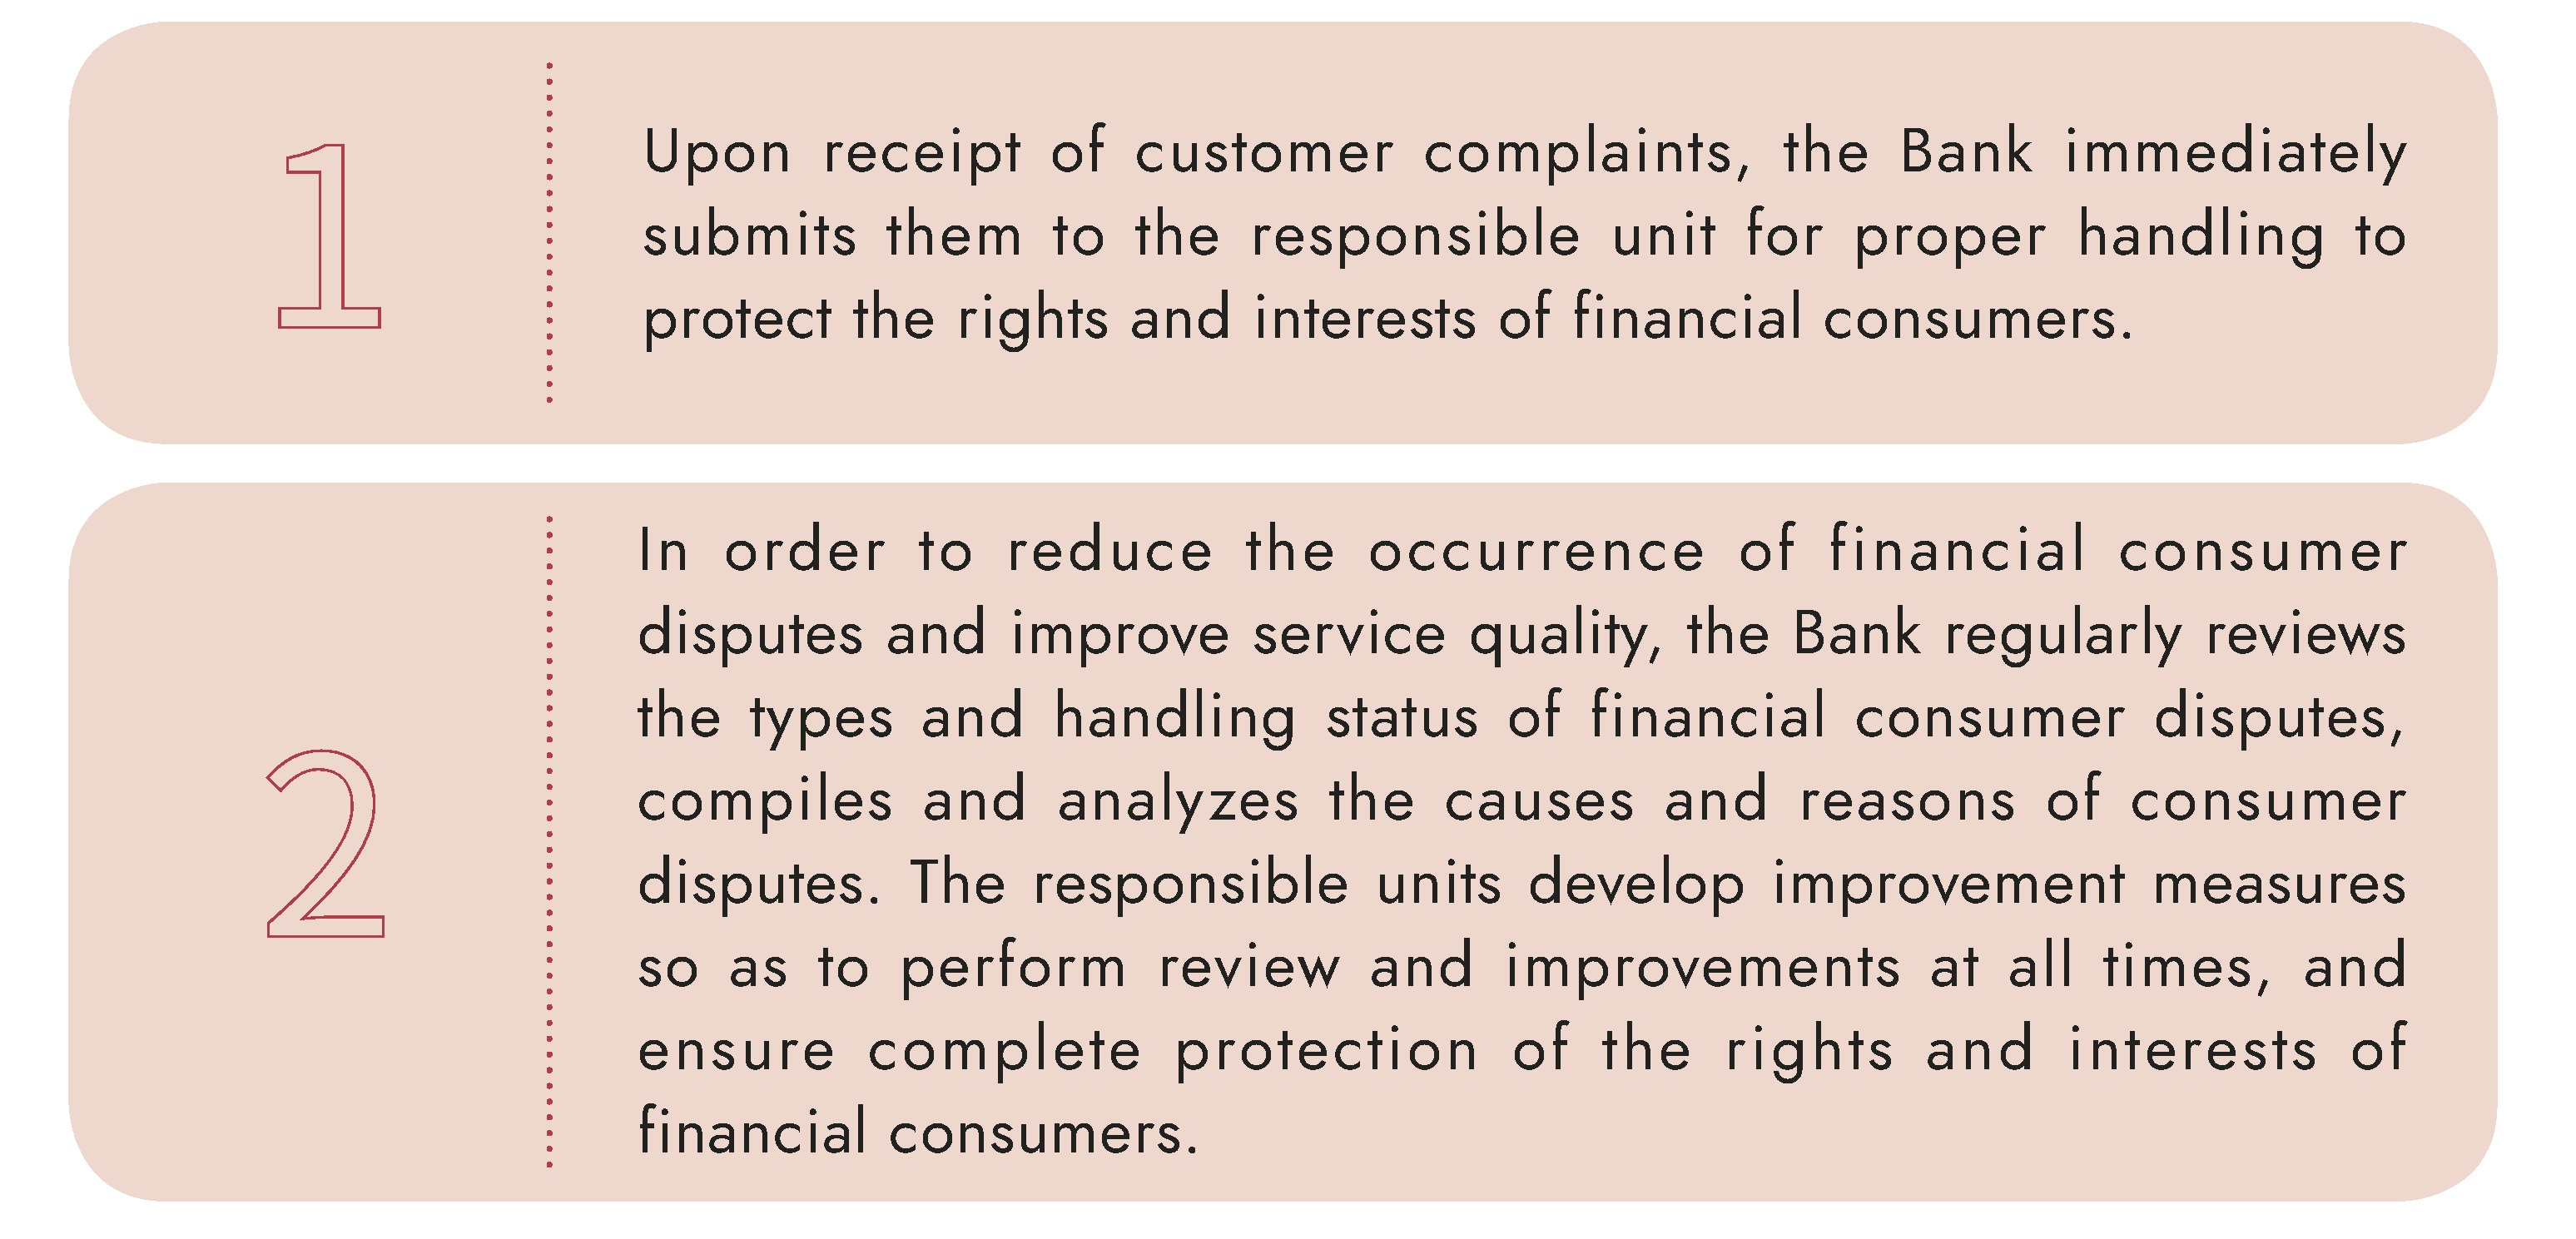 Handling of Customer Complaints